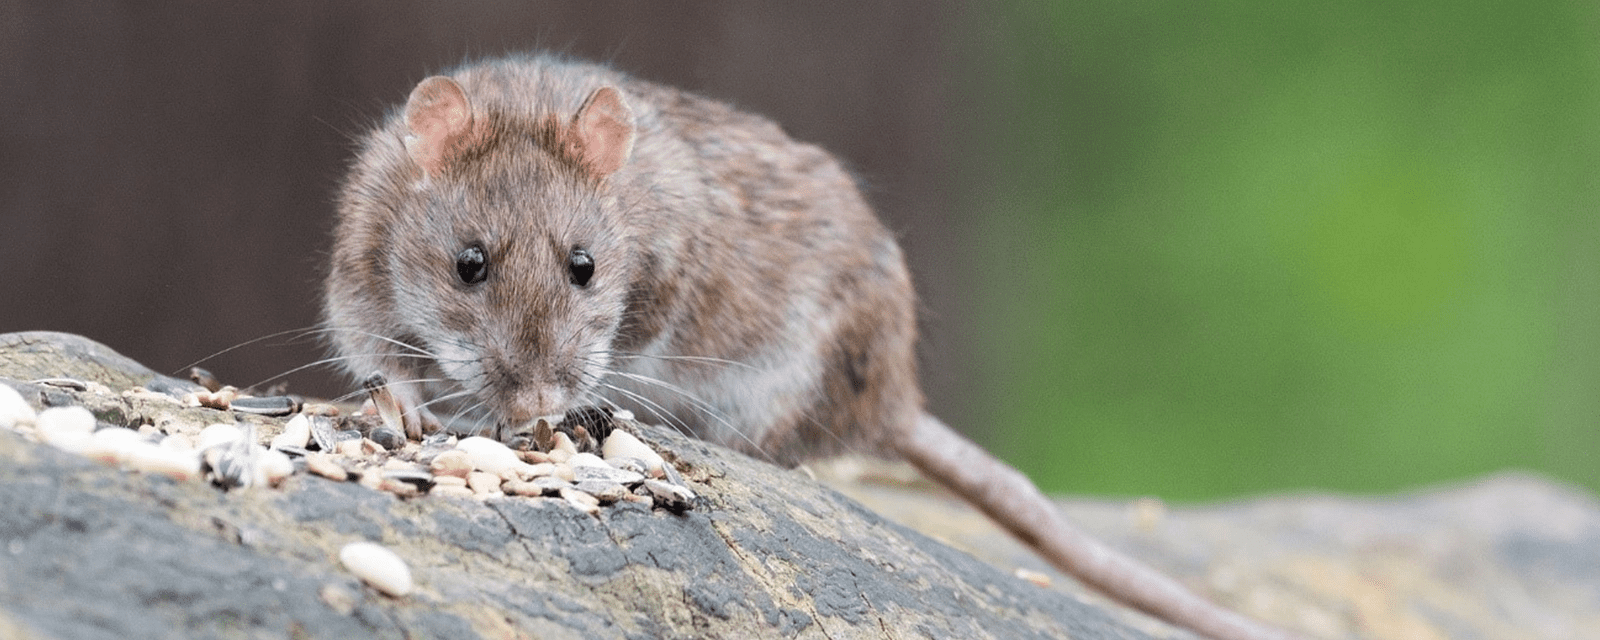 Rat eating seeds on a log